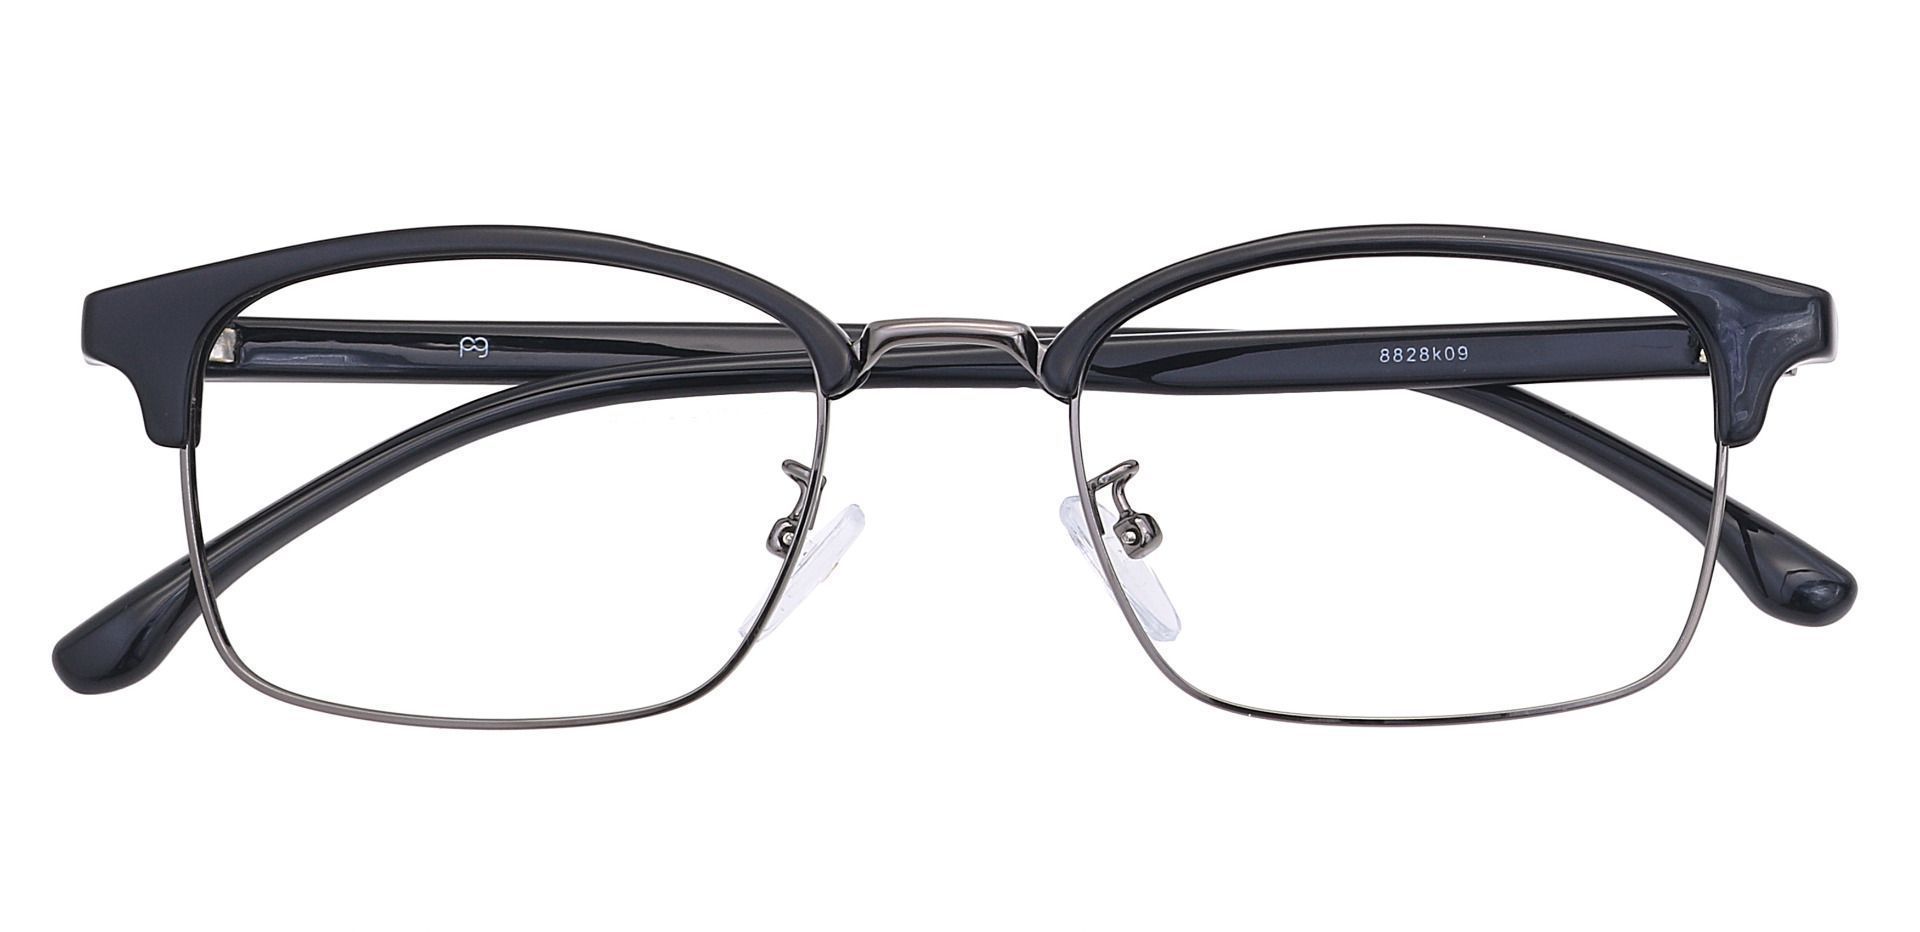 Clover Browline Lined Bifocal Glasses - Black